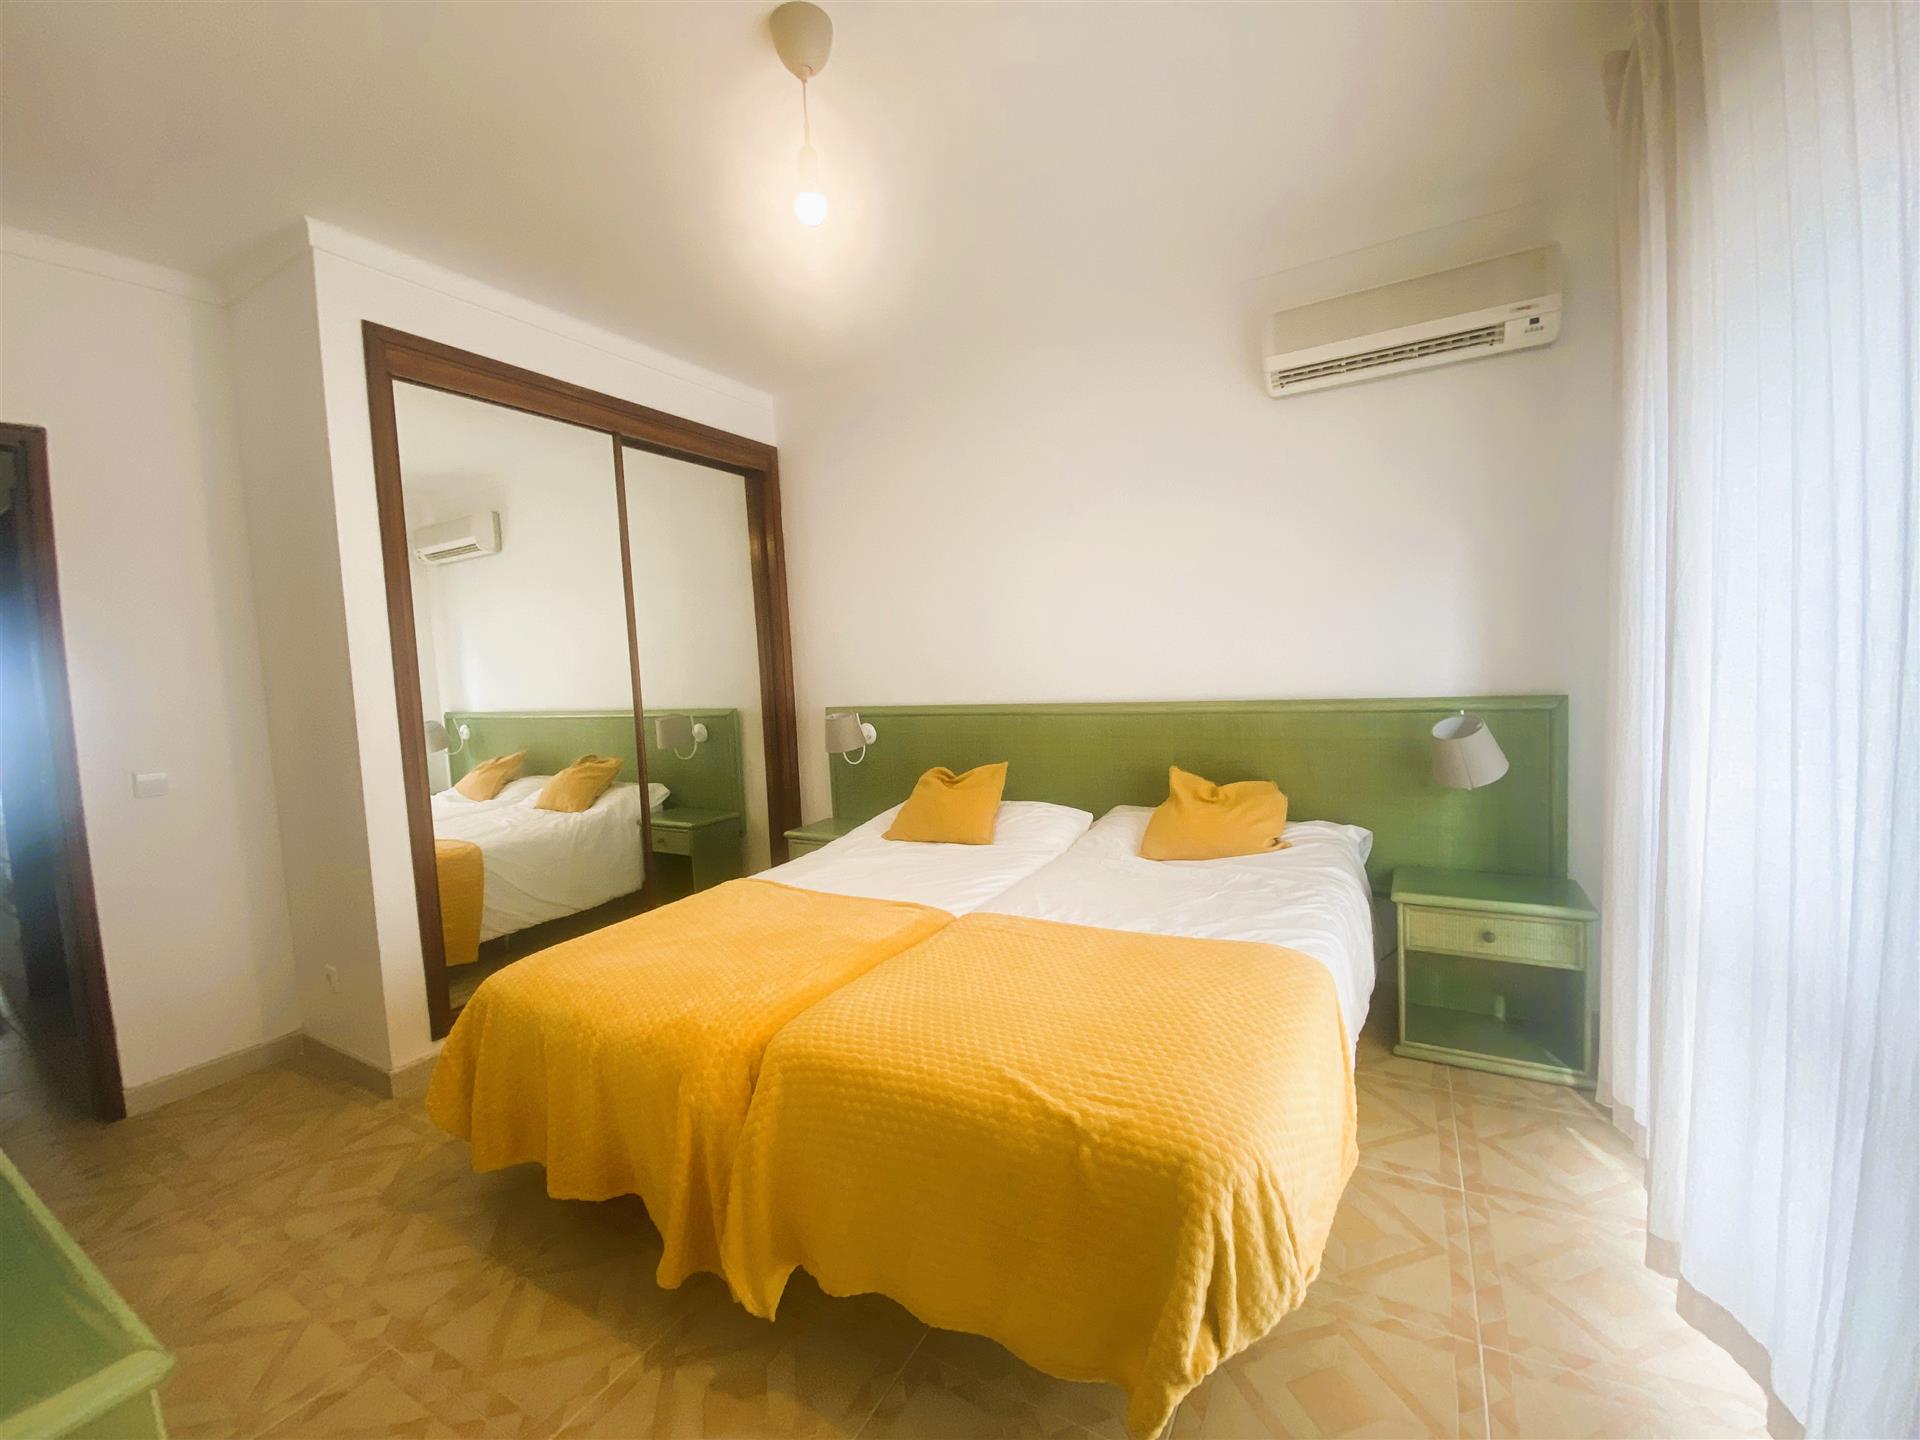 2 bedroom flat with garage 300 meters from Praia da Altura Beach